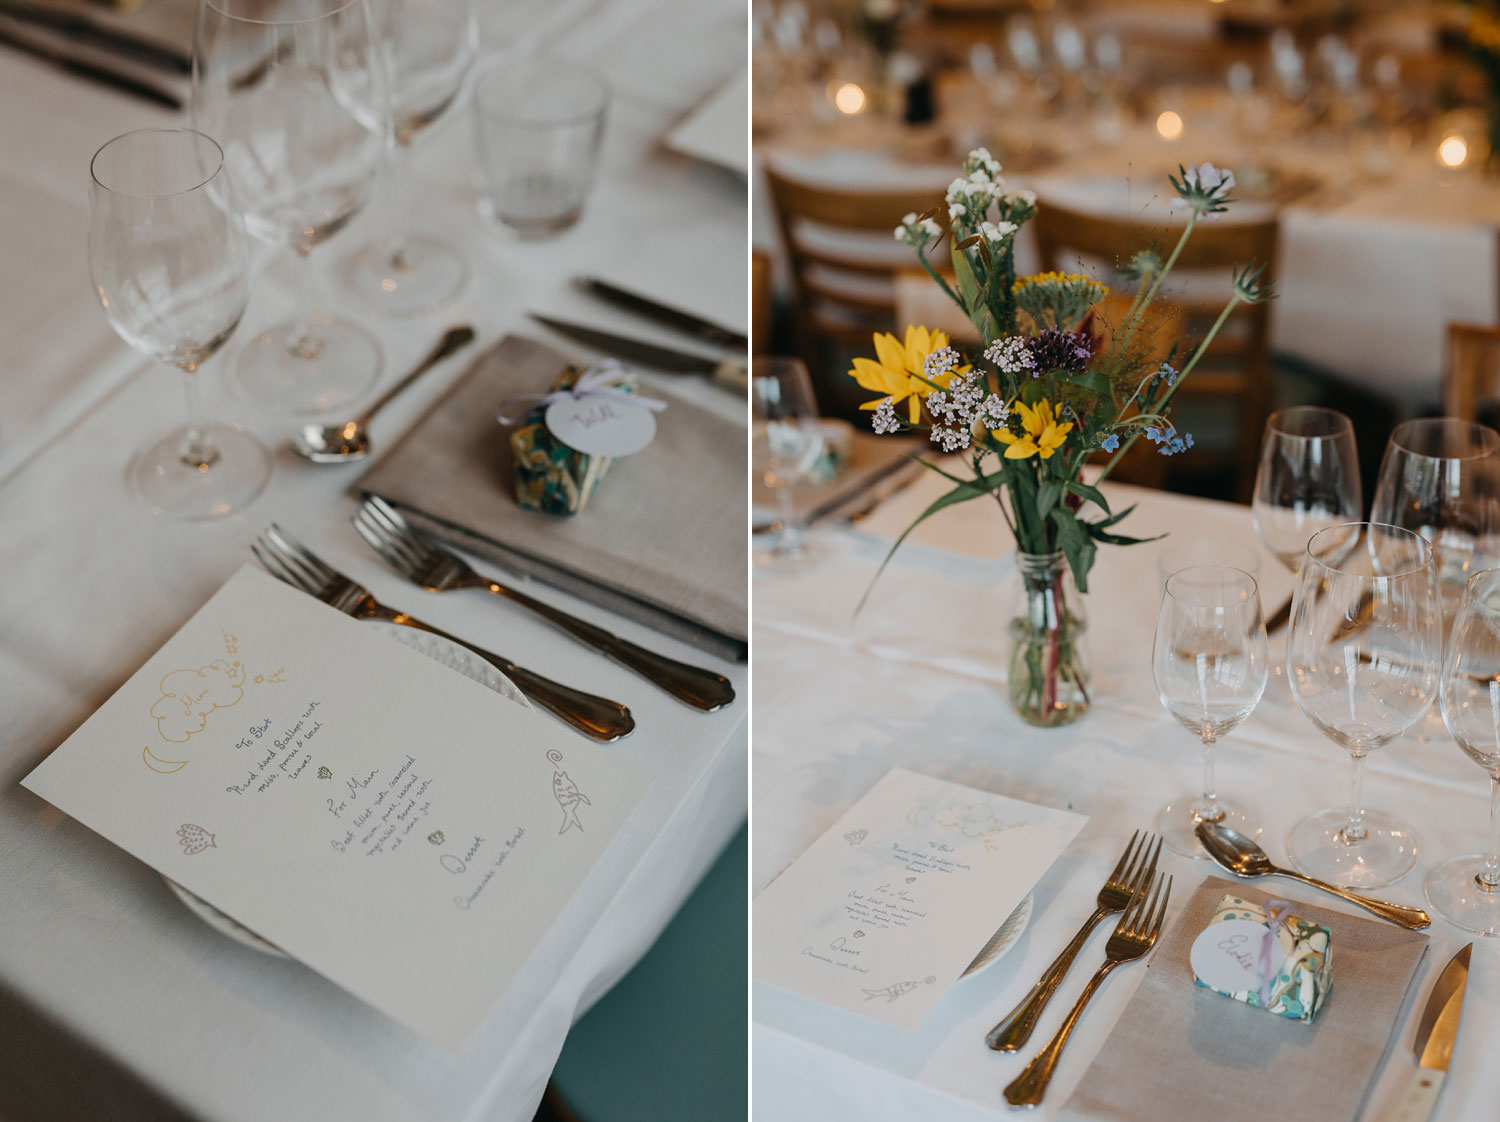 elegant table settings at the reception at Helenekilde Badehotel